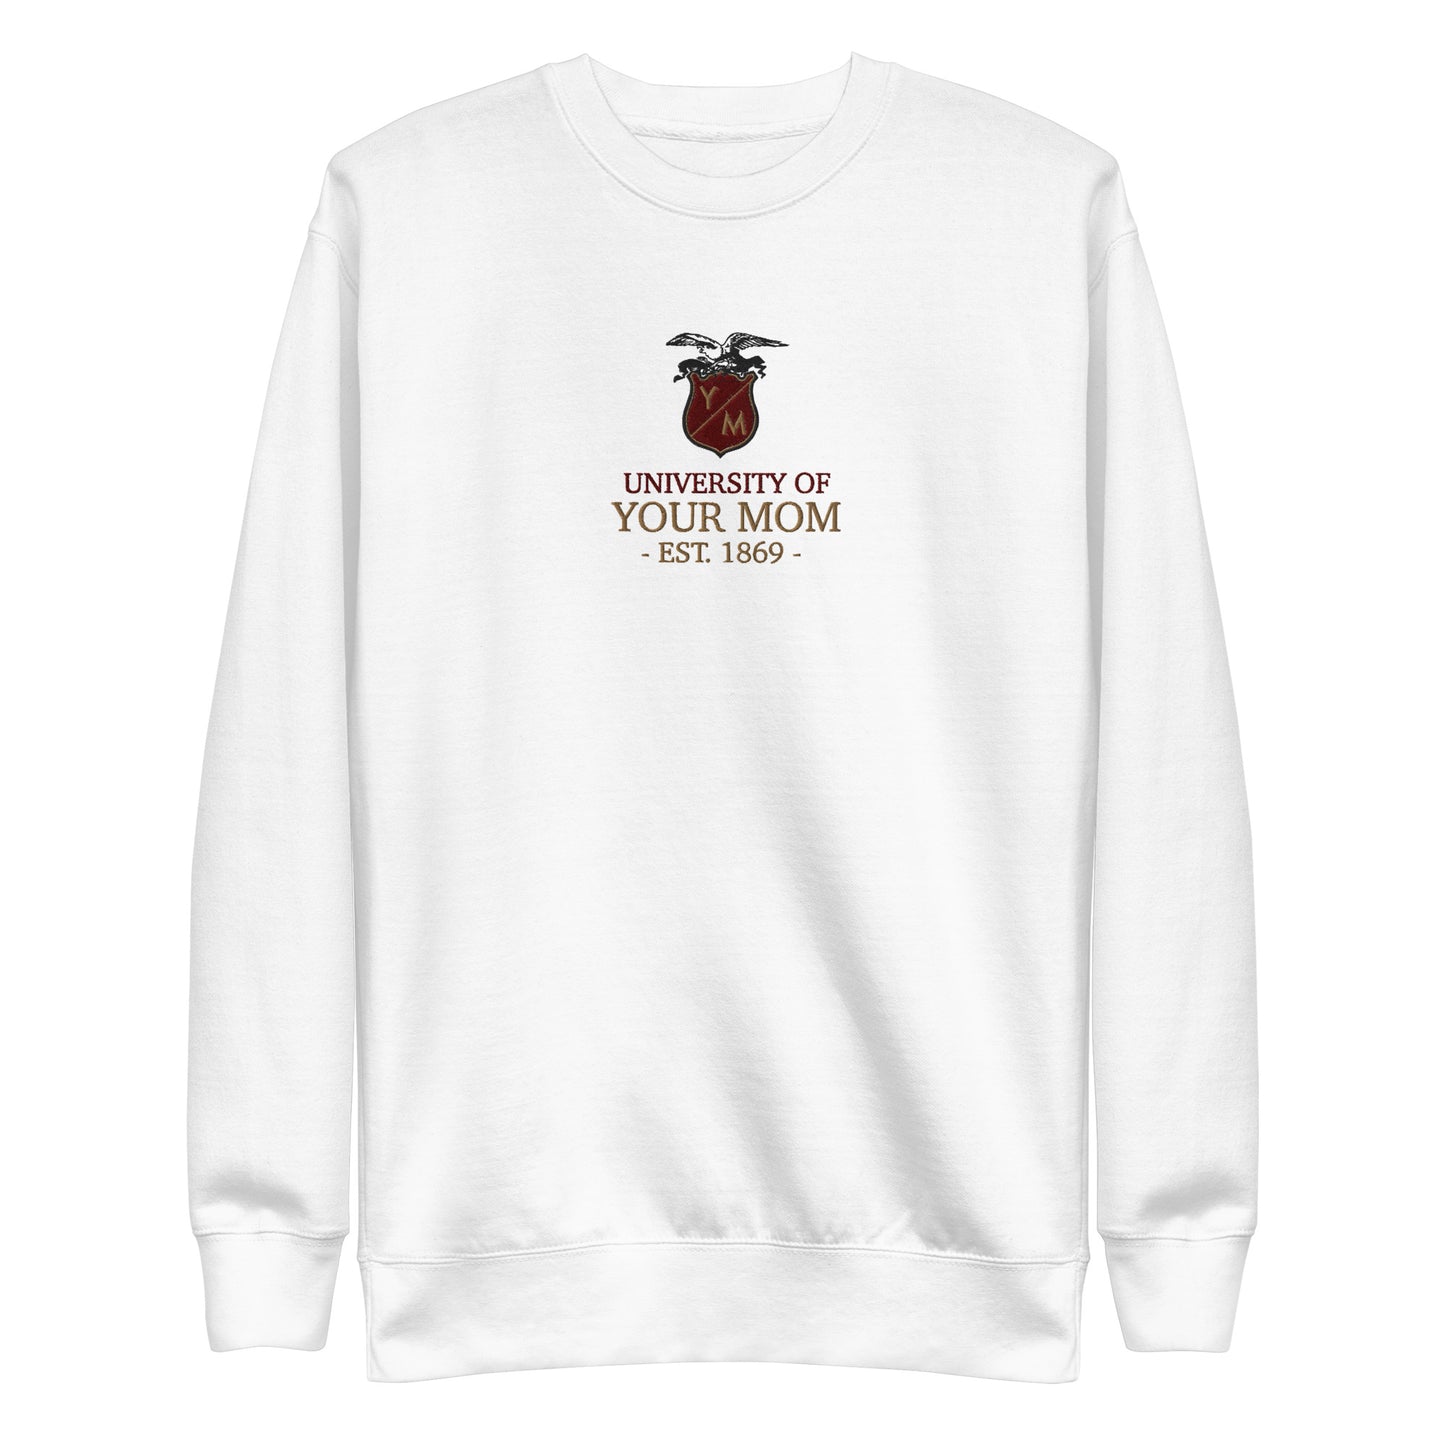 Your Mom University (YMU) Embroidered Sweatshirt